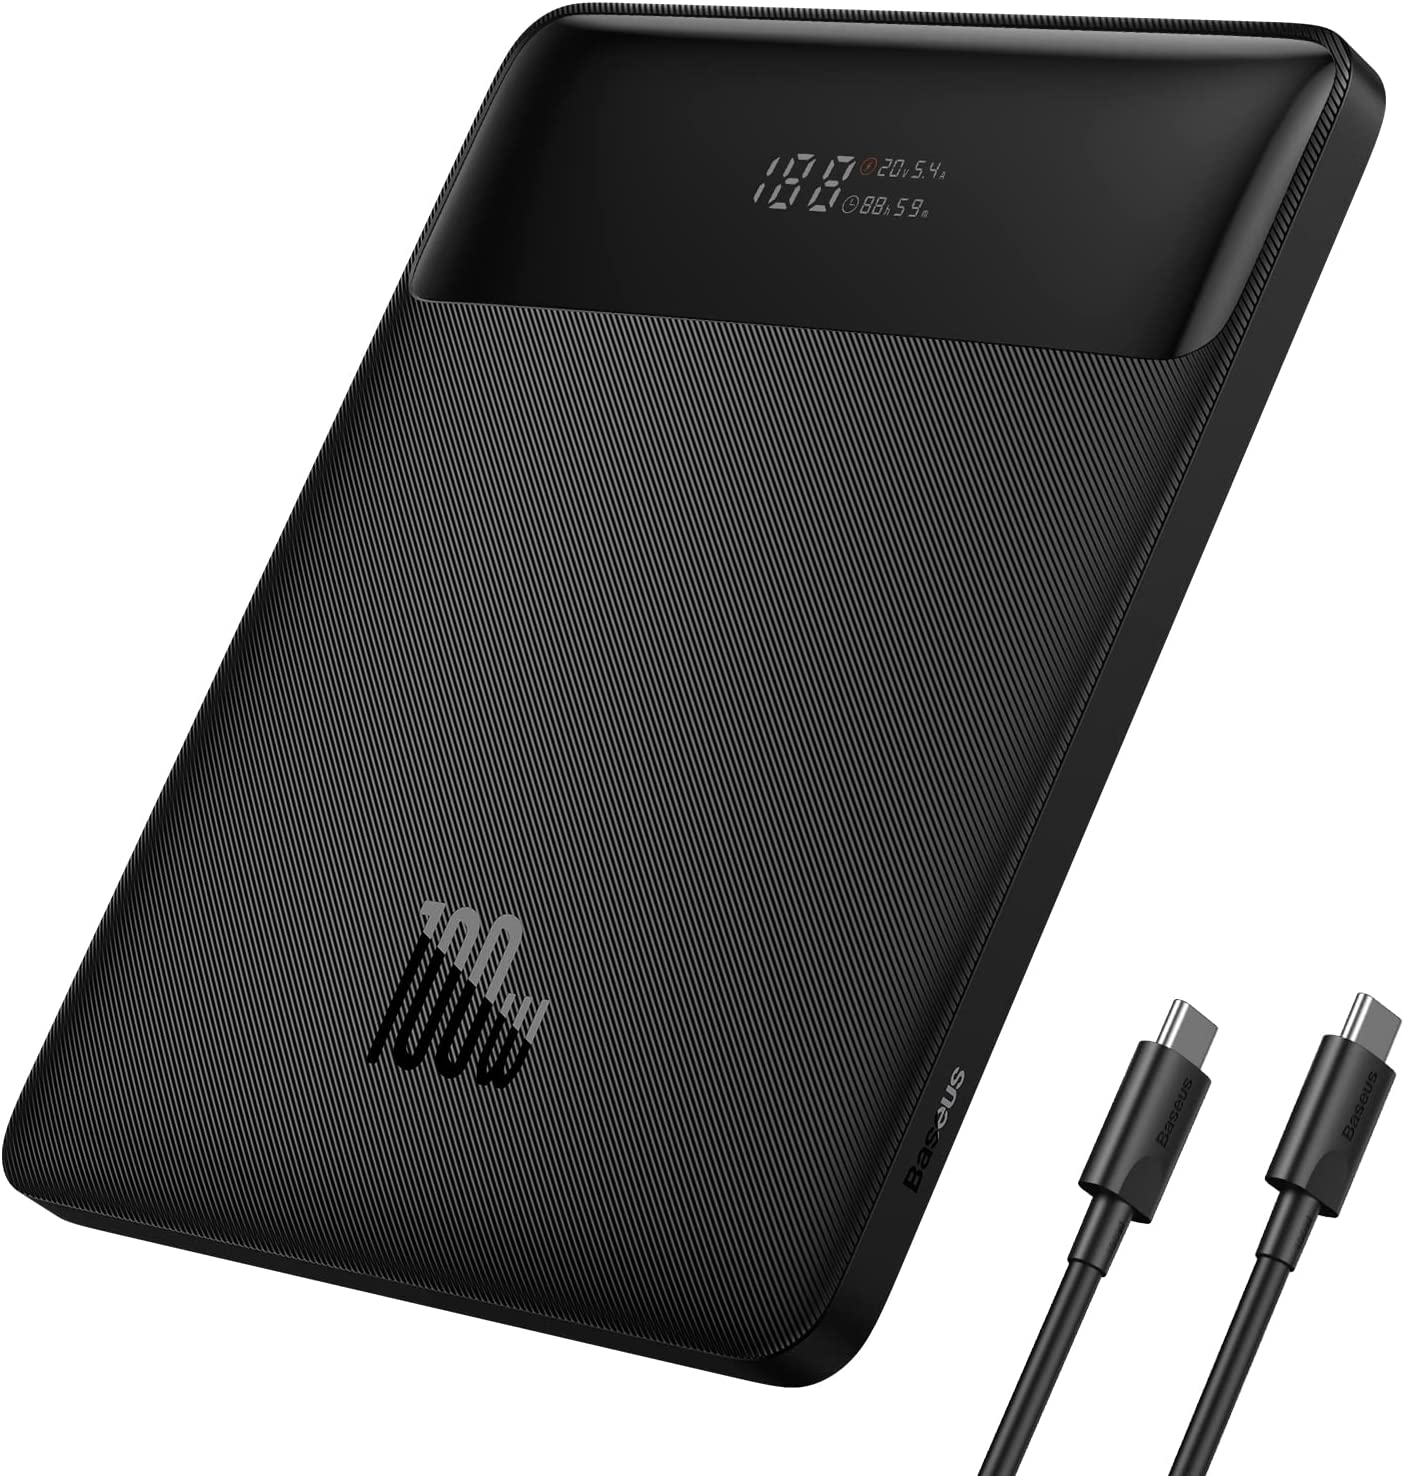 Power bank 20000 mAh USB C Fast charging PD 3.0 external battery 